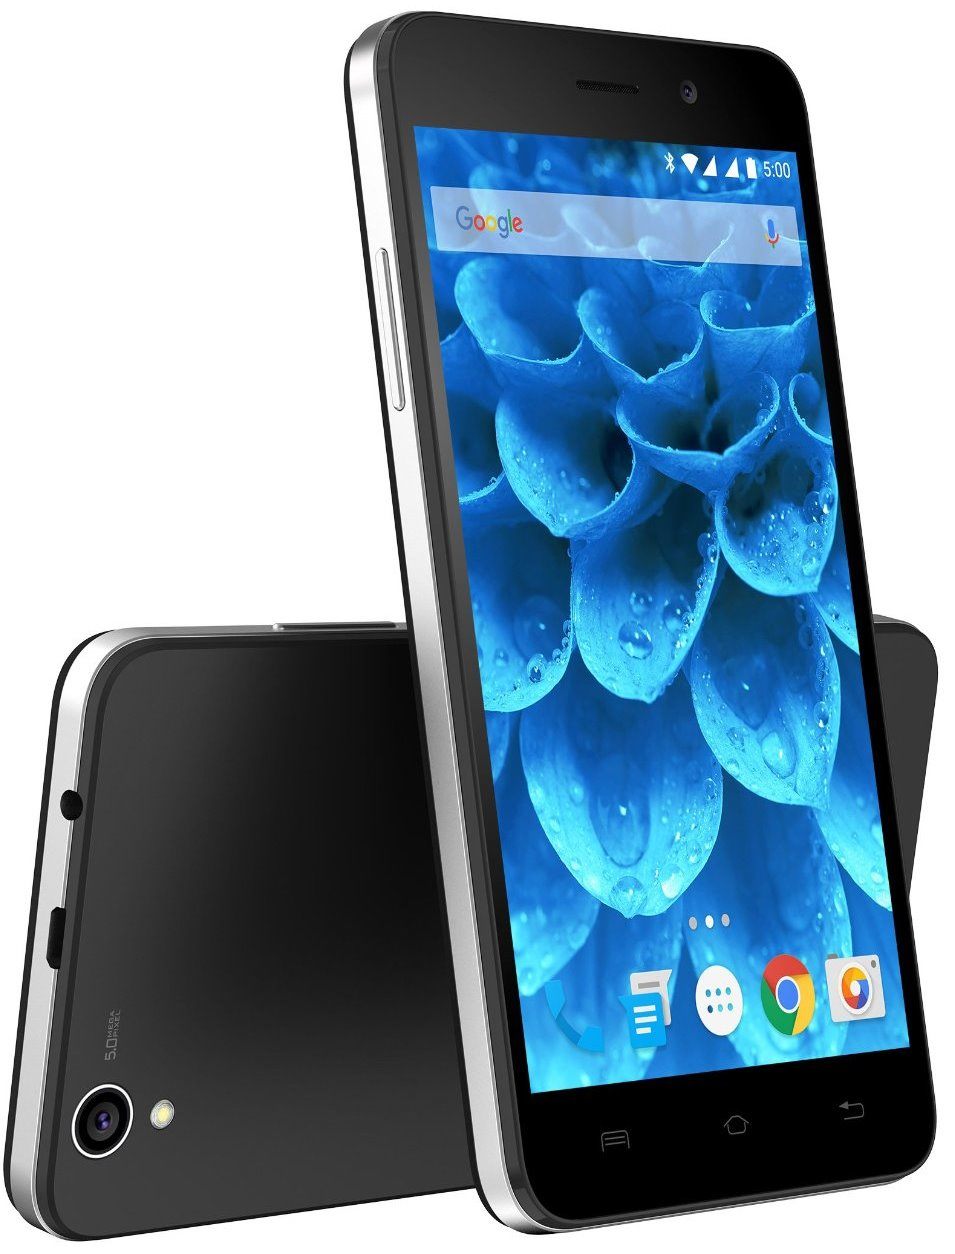 photos of the Lava Atom Iris 3 smartphone used for prototype testing